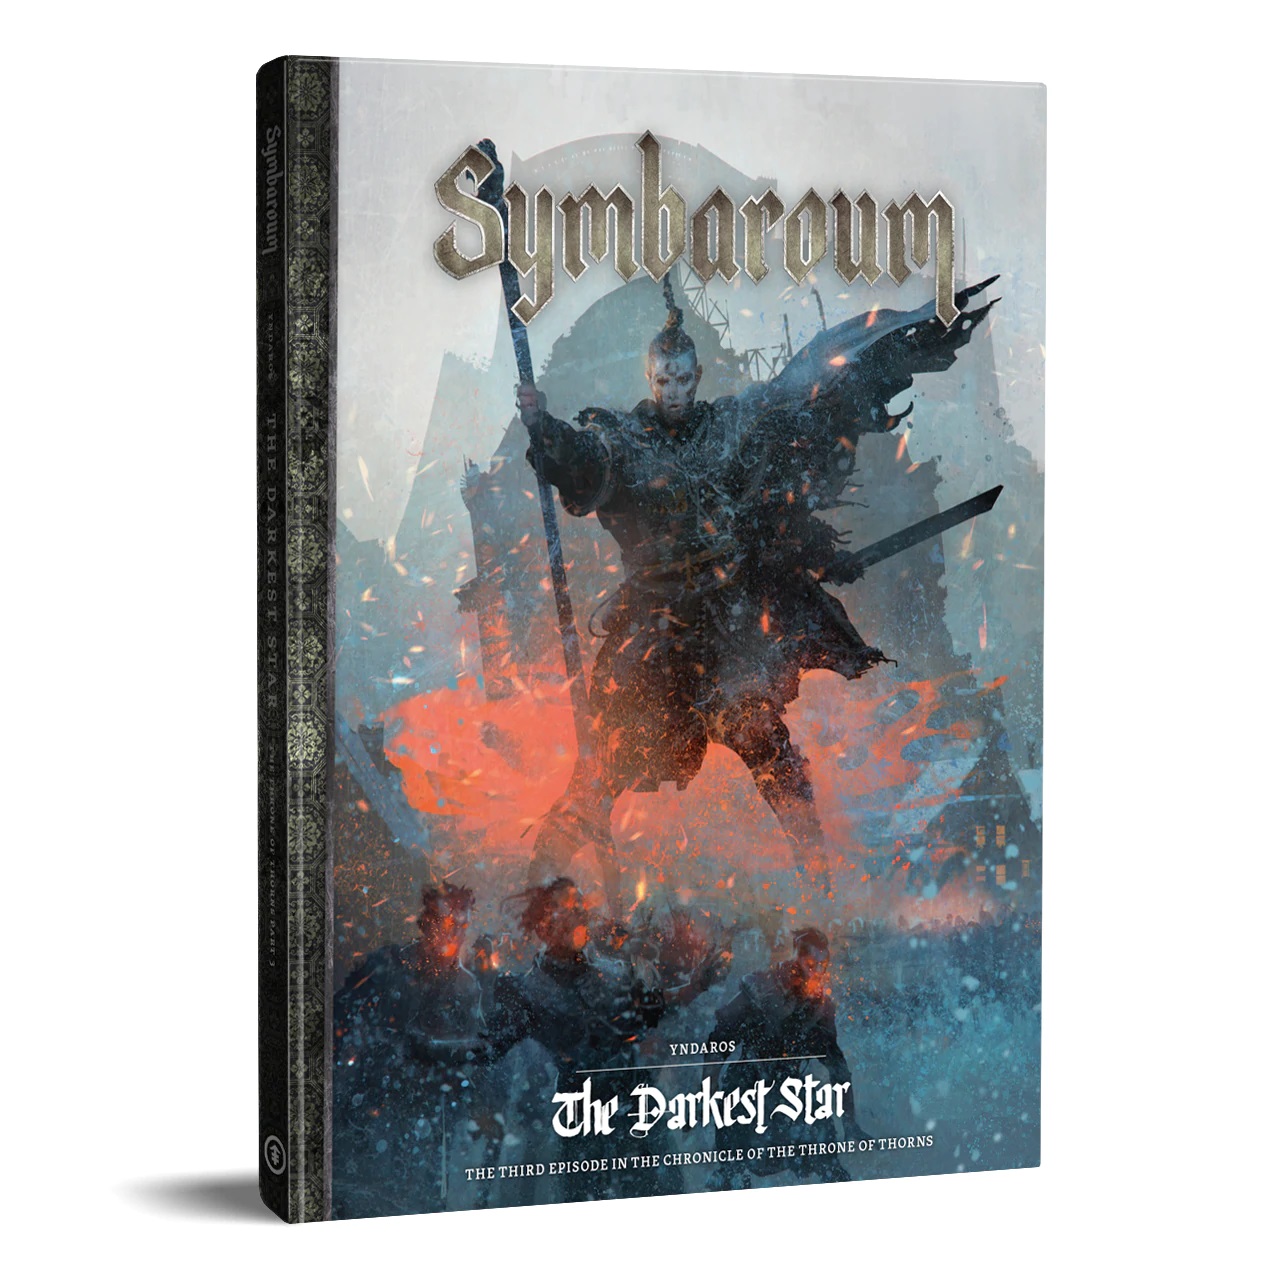 Symbaroum: Yndaros - The Darkest Star